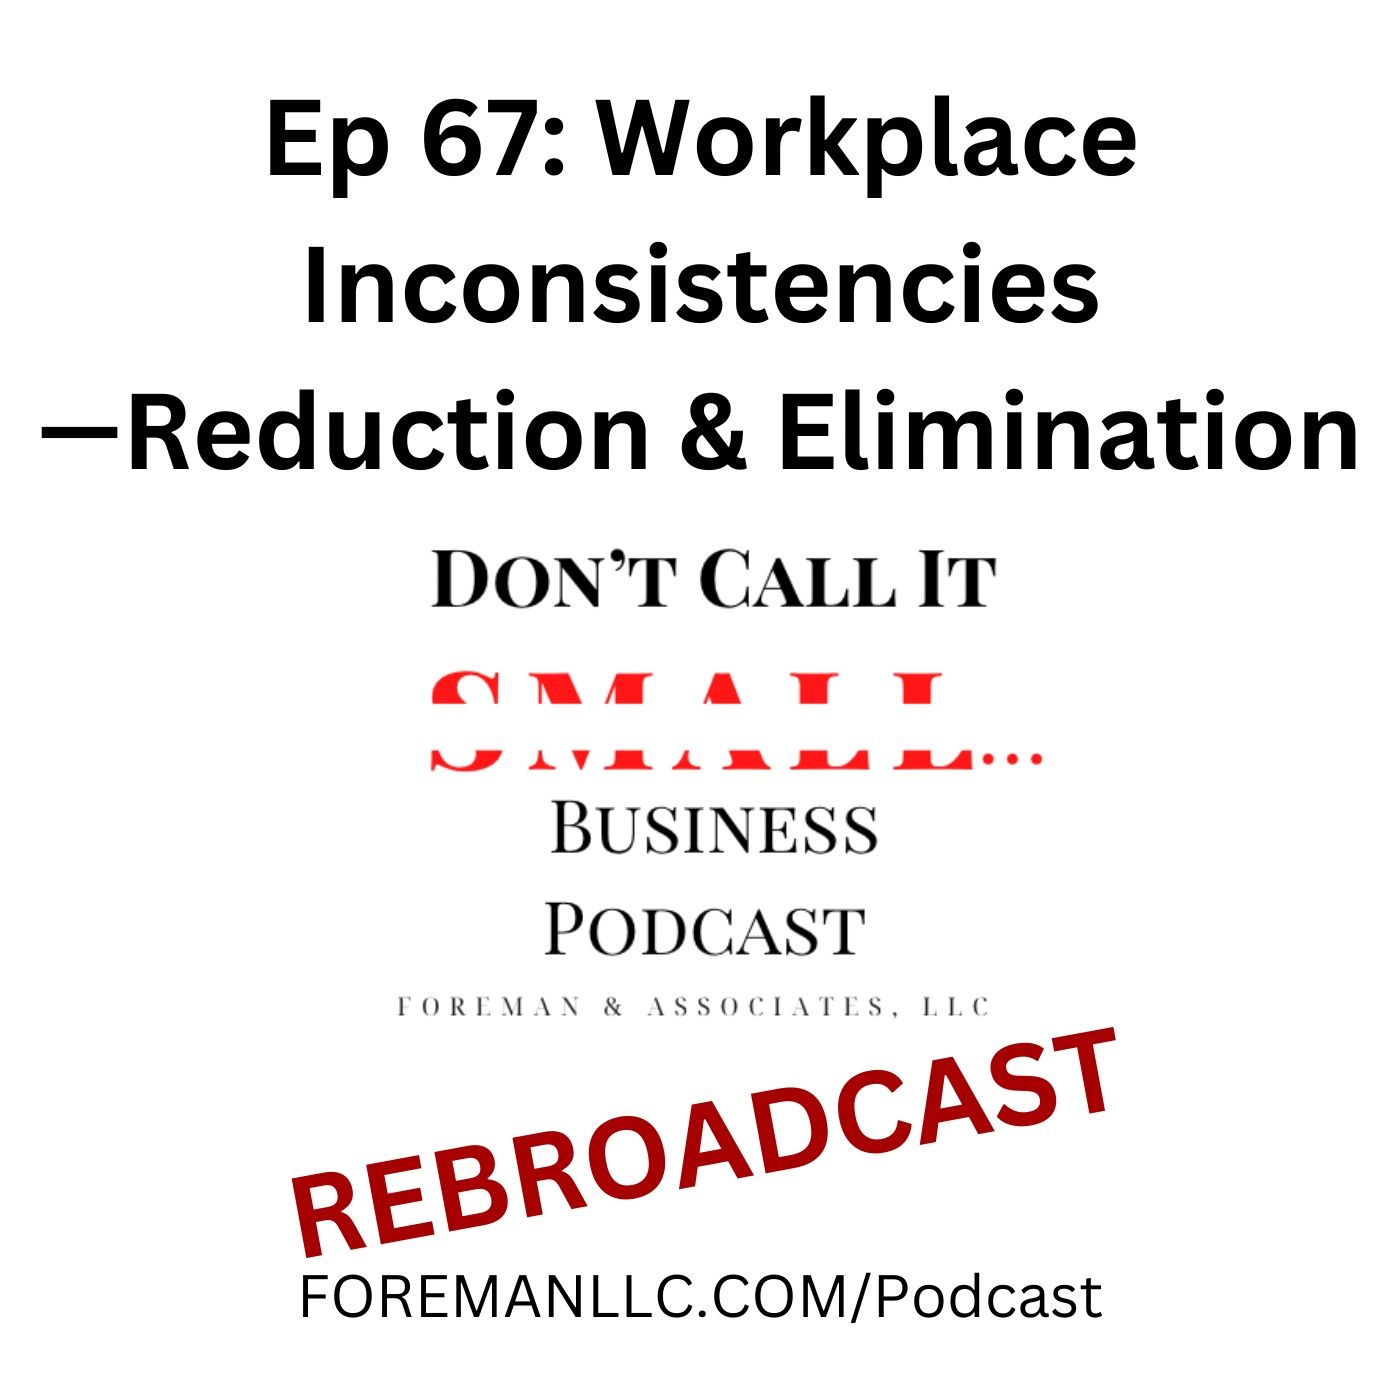 REBROADCAST Ep 67 Workplace Inconsistencies